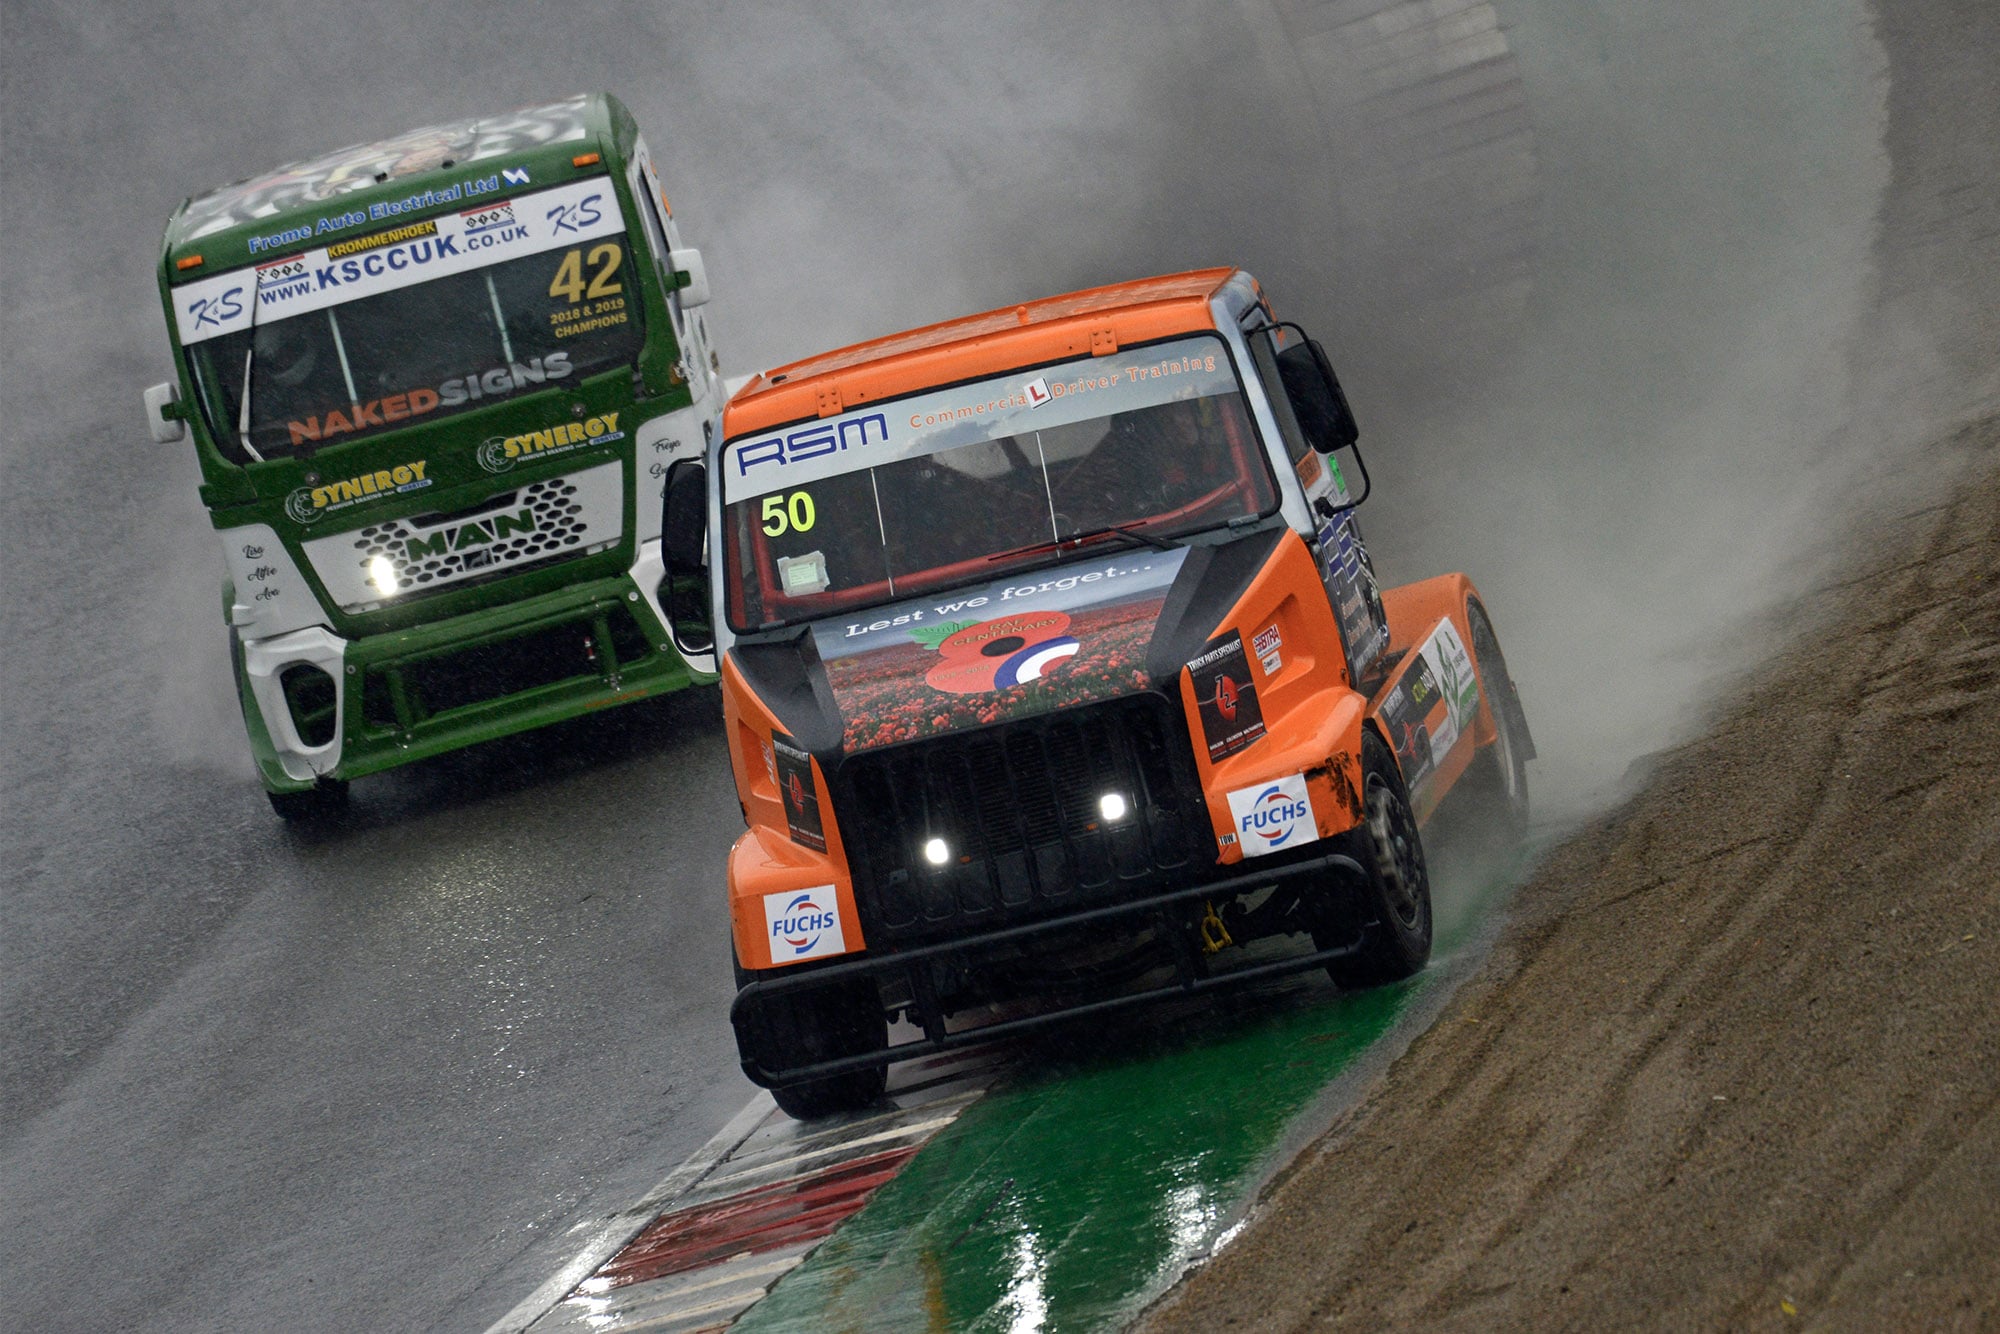 British Truck Racing Association Championship racing from Brands Hatch